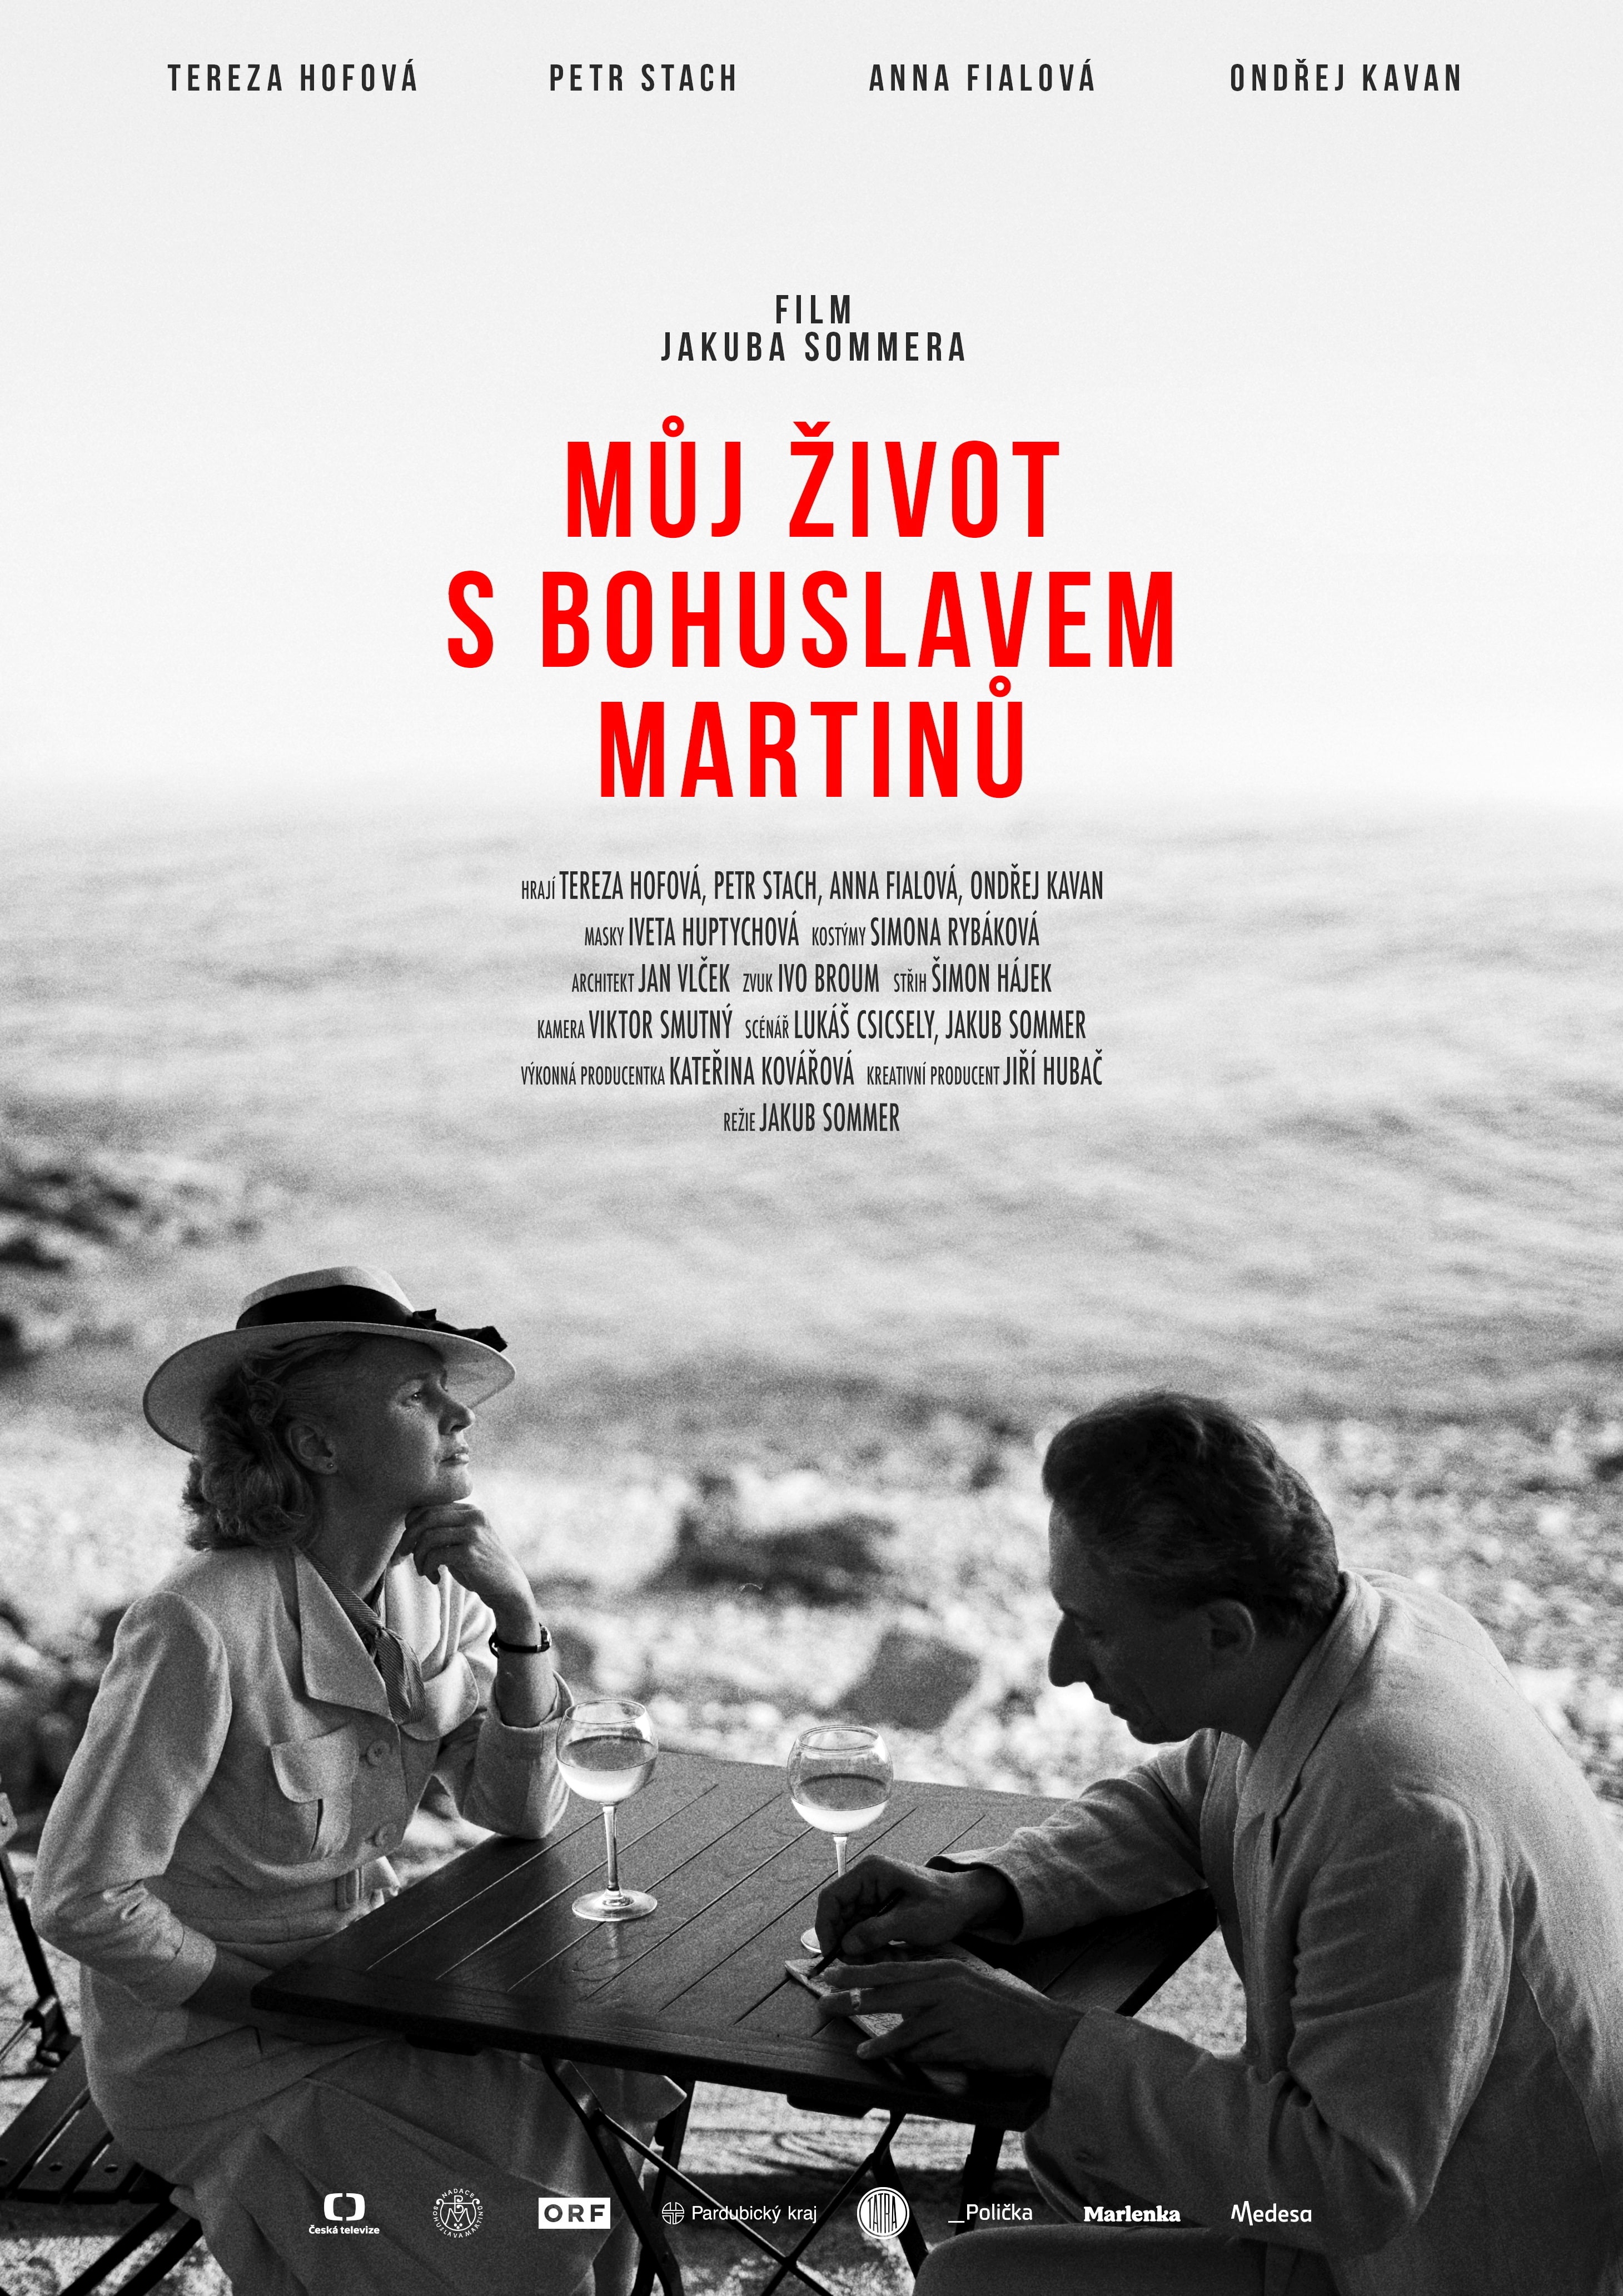 A new film about Bohuslav Martinu